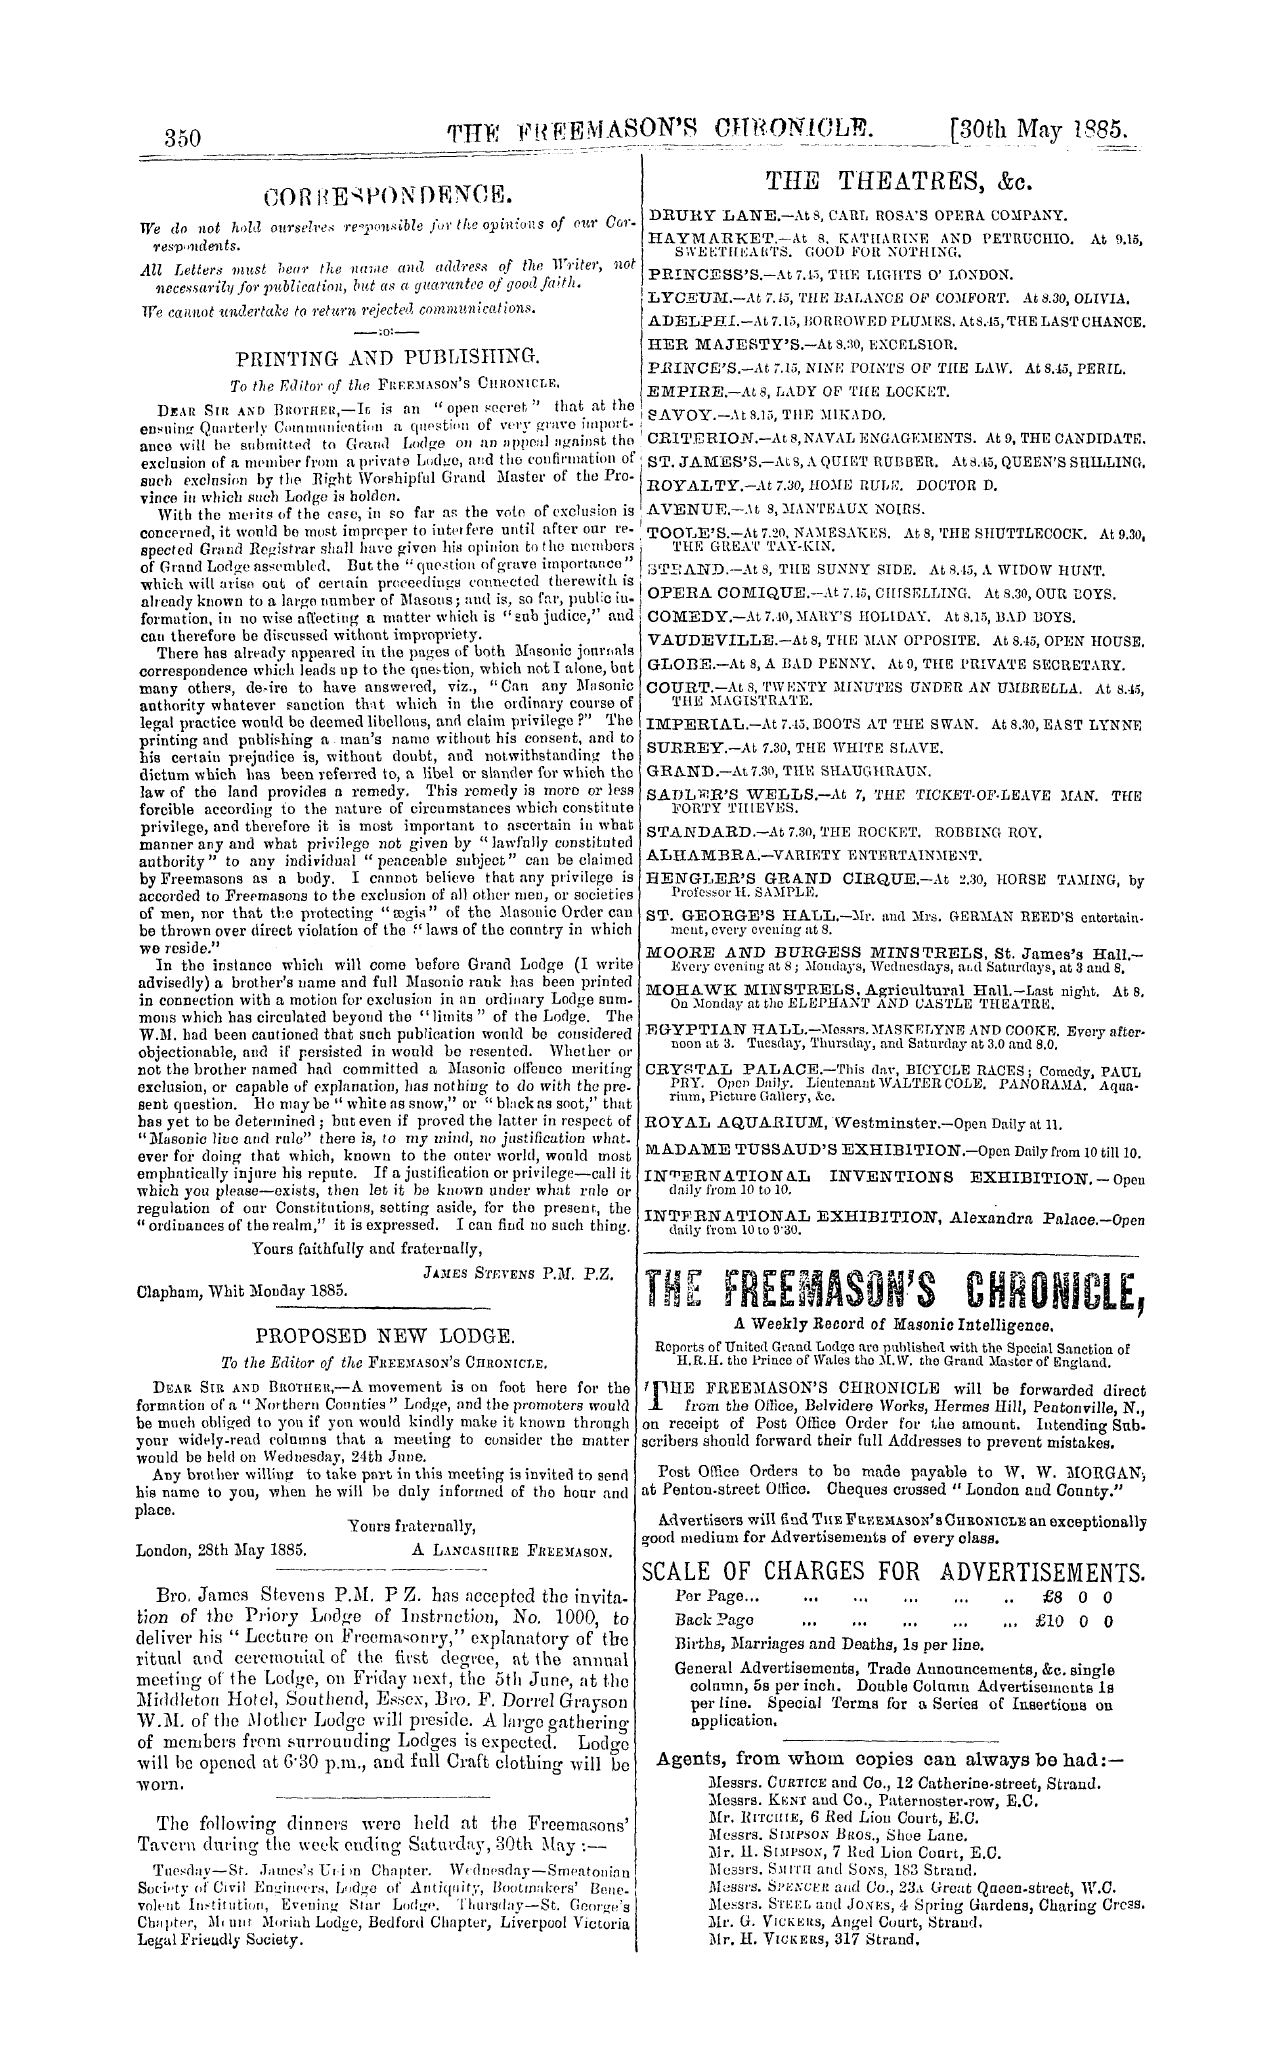 The Freemason's Chronicle: 1885-05-30: 14